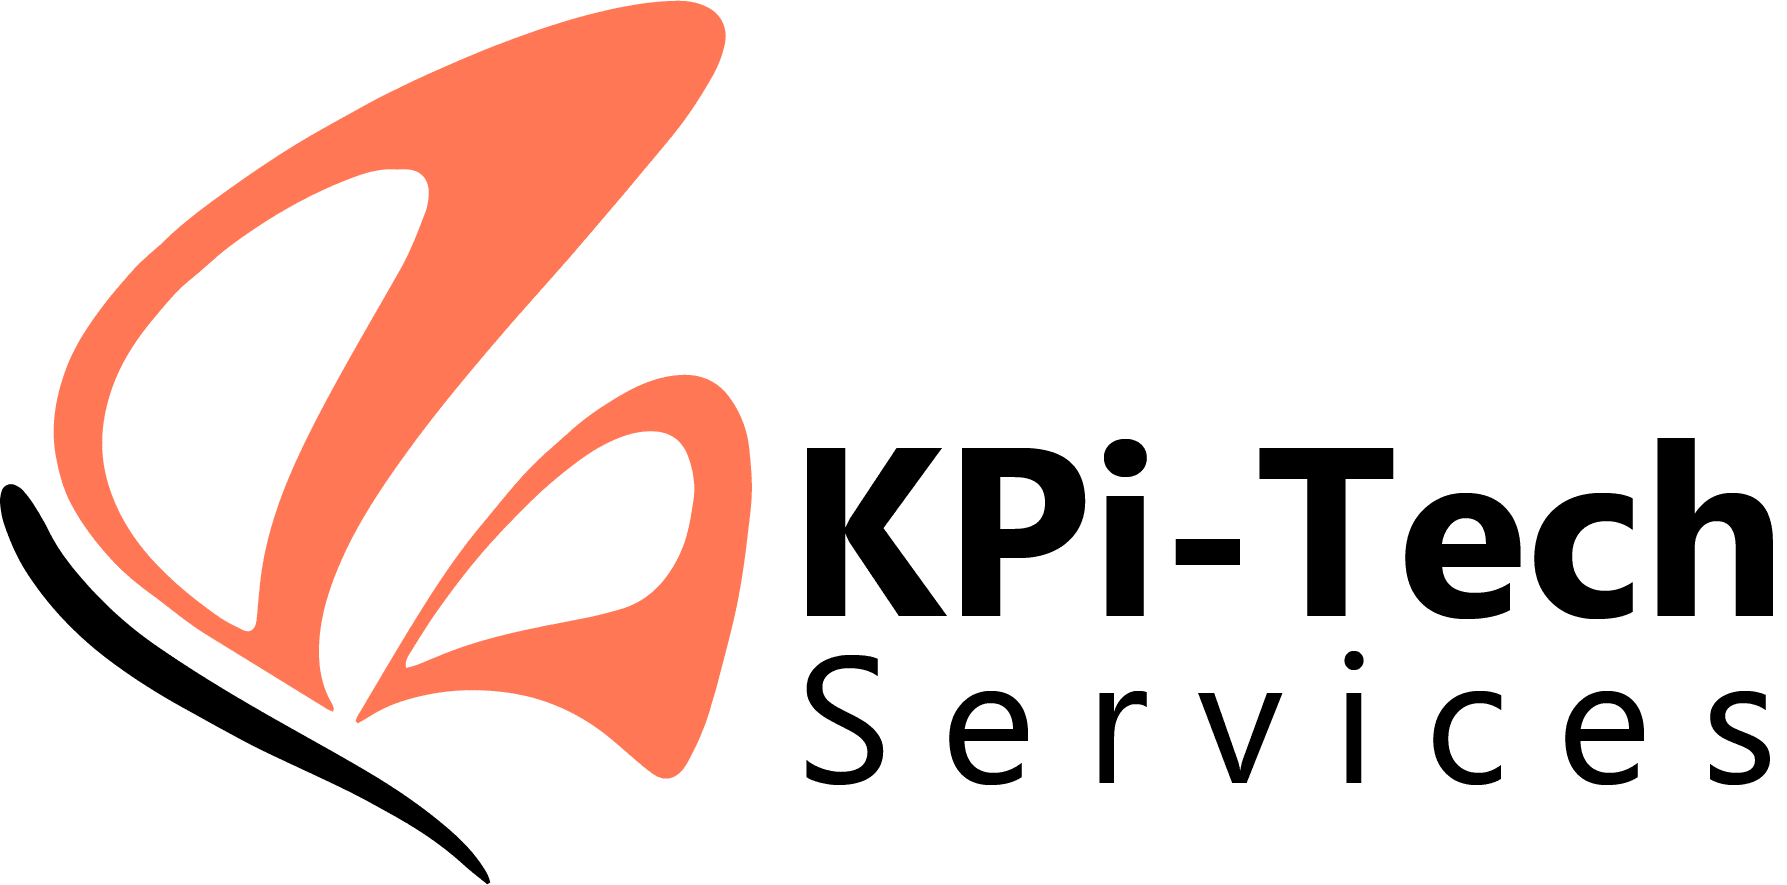 Kpi logo